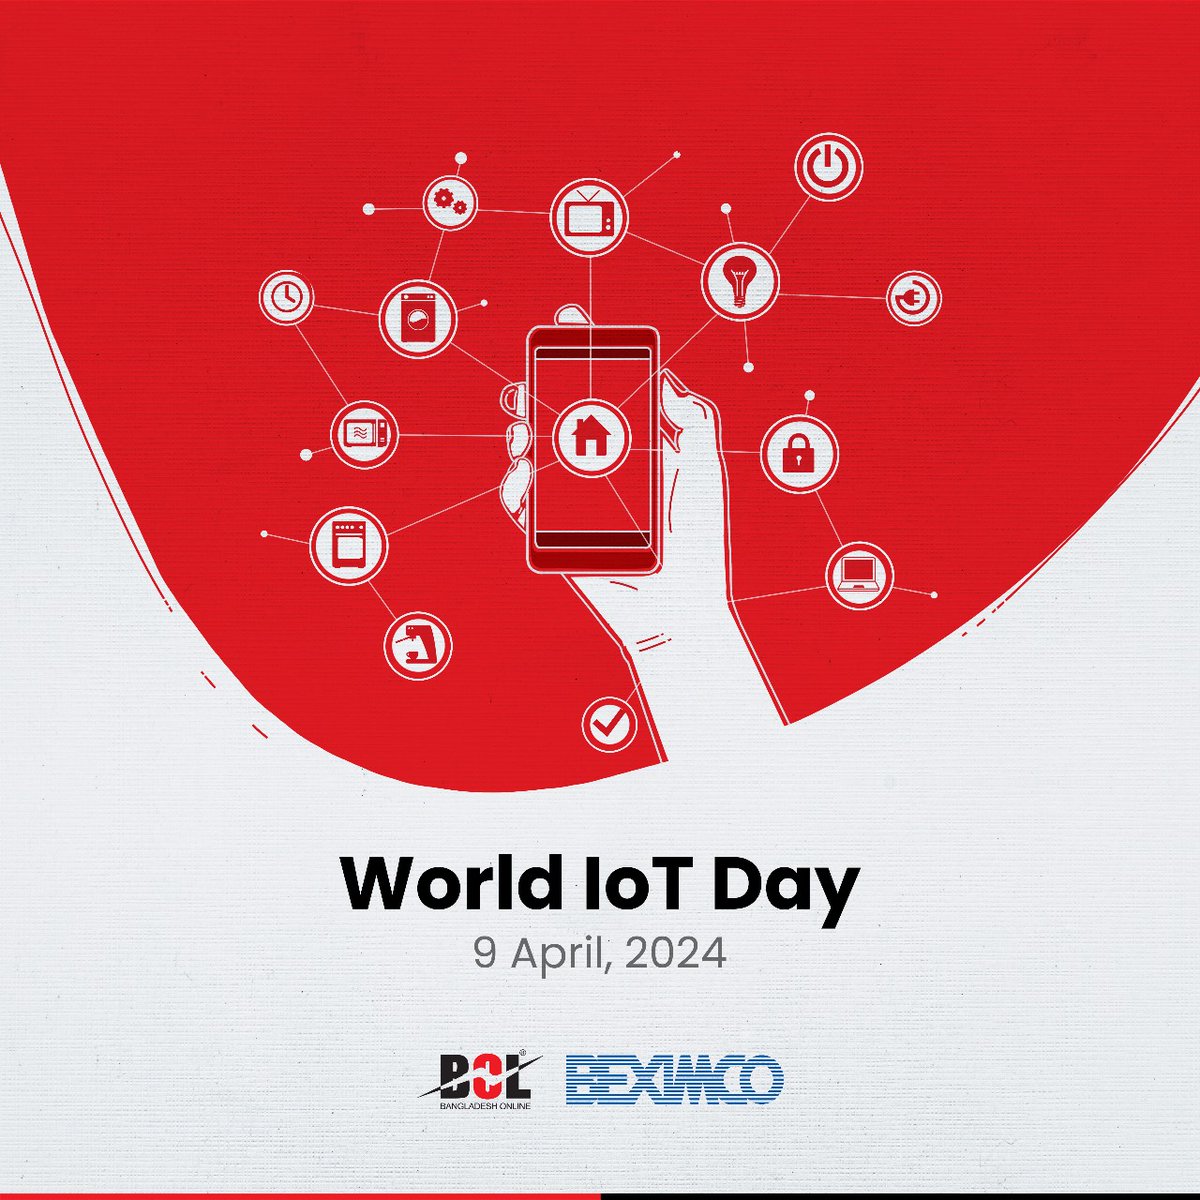 World IoT Day

#BOL #BangladeshOnline #BEXIMCOIT #BEXIMCO #IoTDay